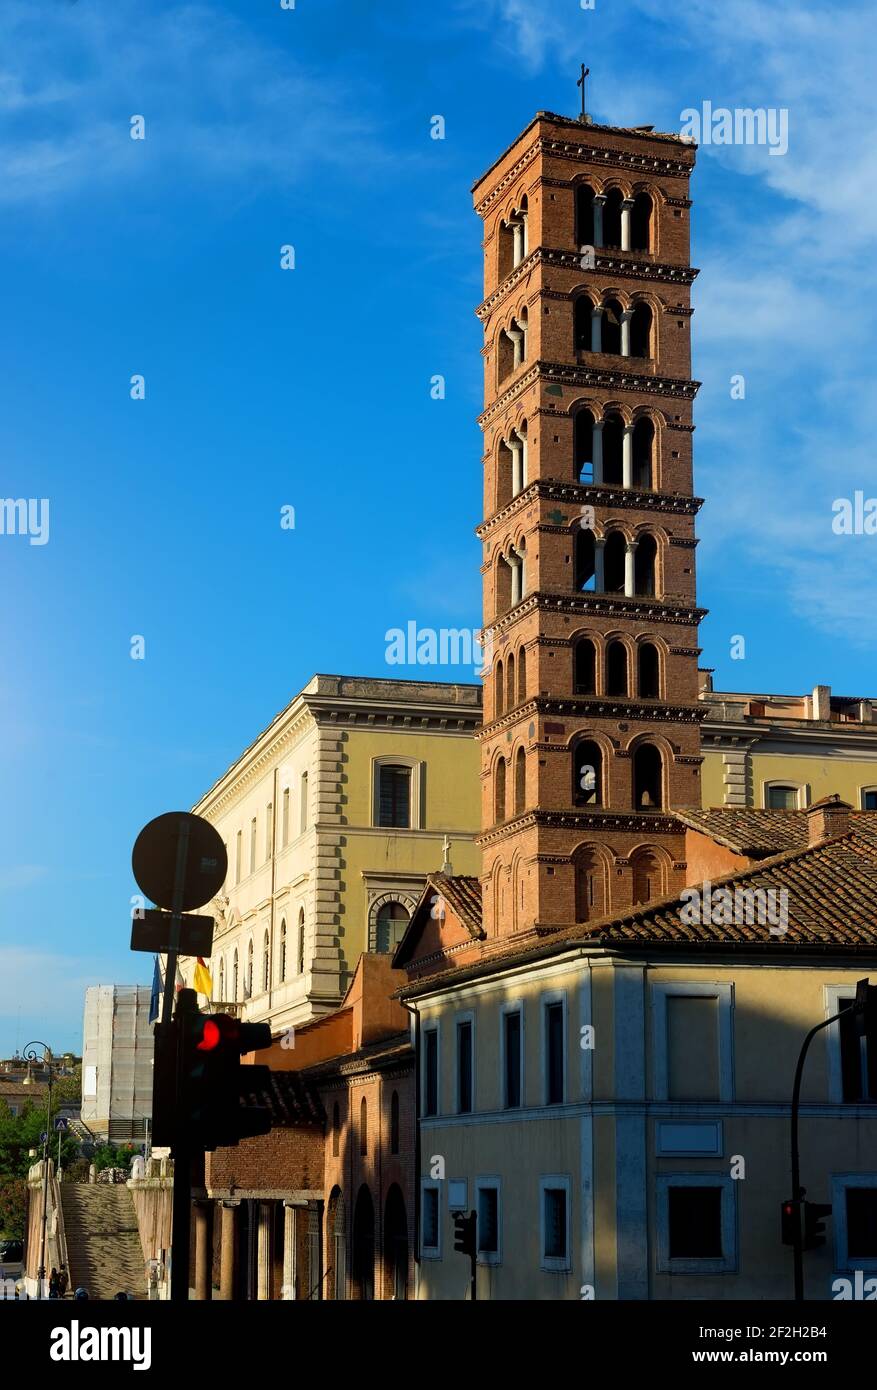 Campanile of Santa Maria in Cosmedin church in Rome, Italy Stock Photo